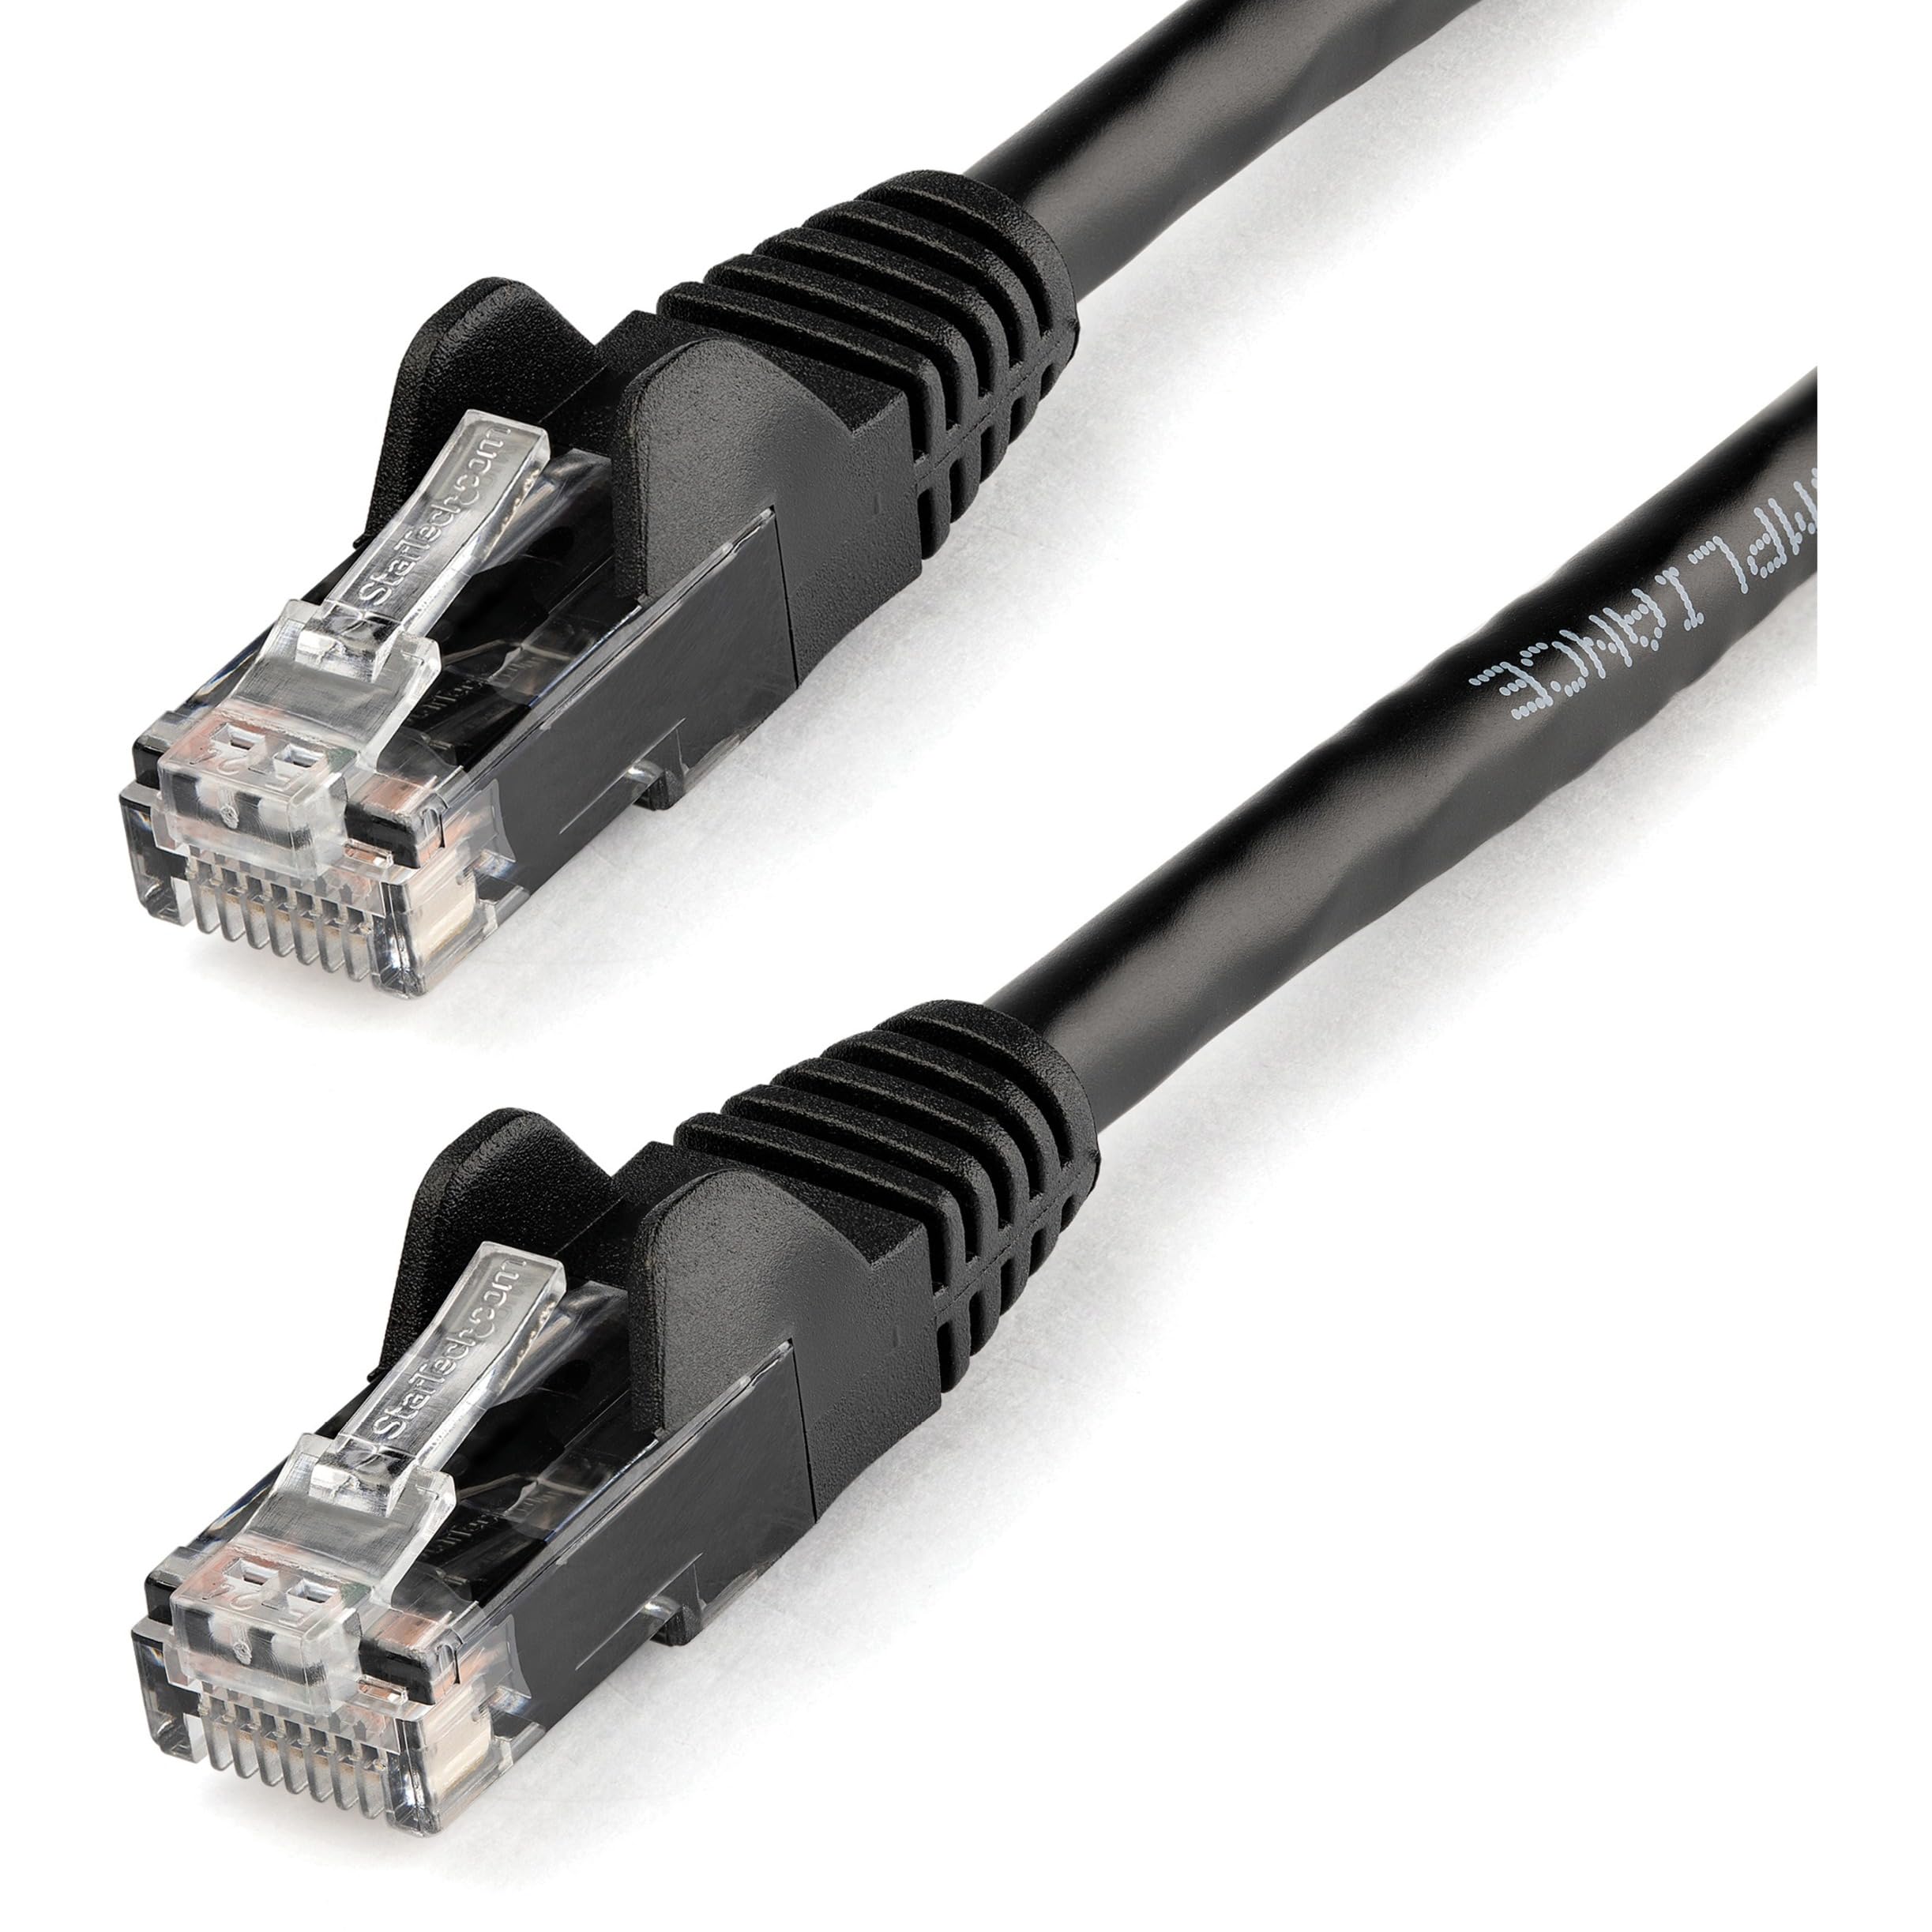 StarTech.com CAT6 Ethernet-Kabel, 22,9 m, schwarz, CAT 6 Gigabit Ethernet-Draht, 650 MHz, 100 W, PoE, RJ45, UTP, Netzwerk/Patchkabel, snagless w/Zugentlastung Fluke getestet/Verkabelung ist